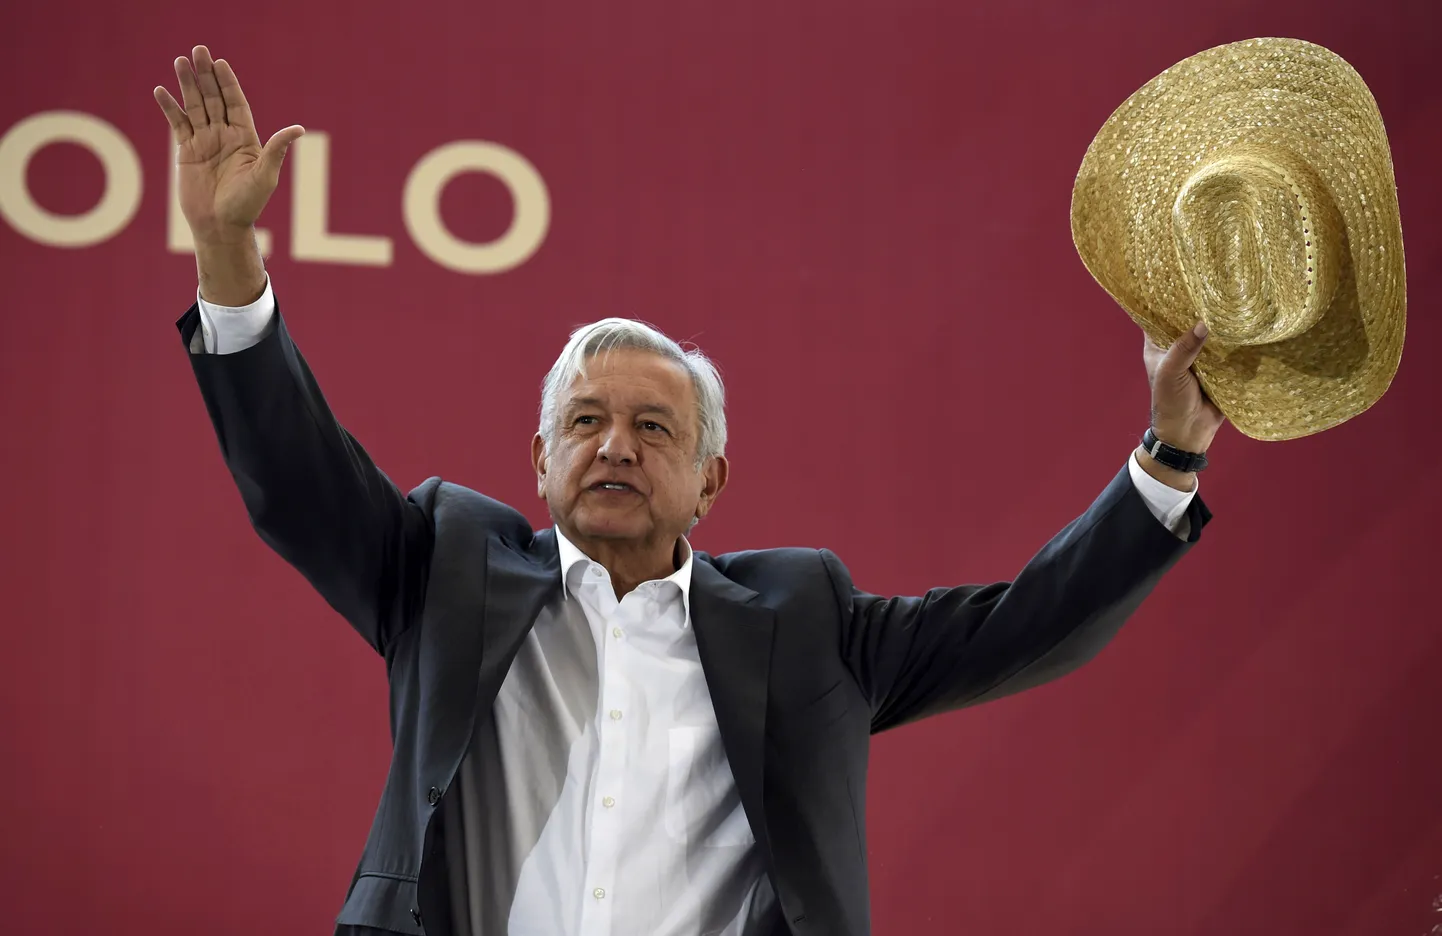 Pildil on Mehhiko president Andres Manuel Lopez Obrador.